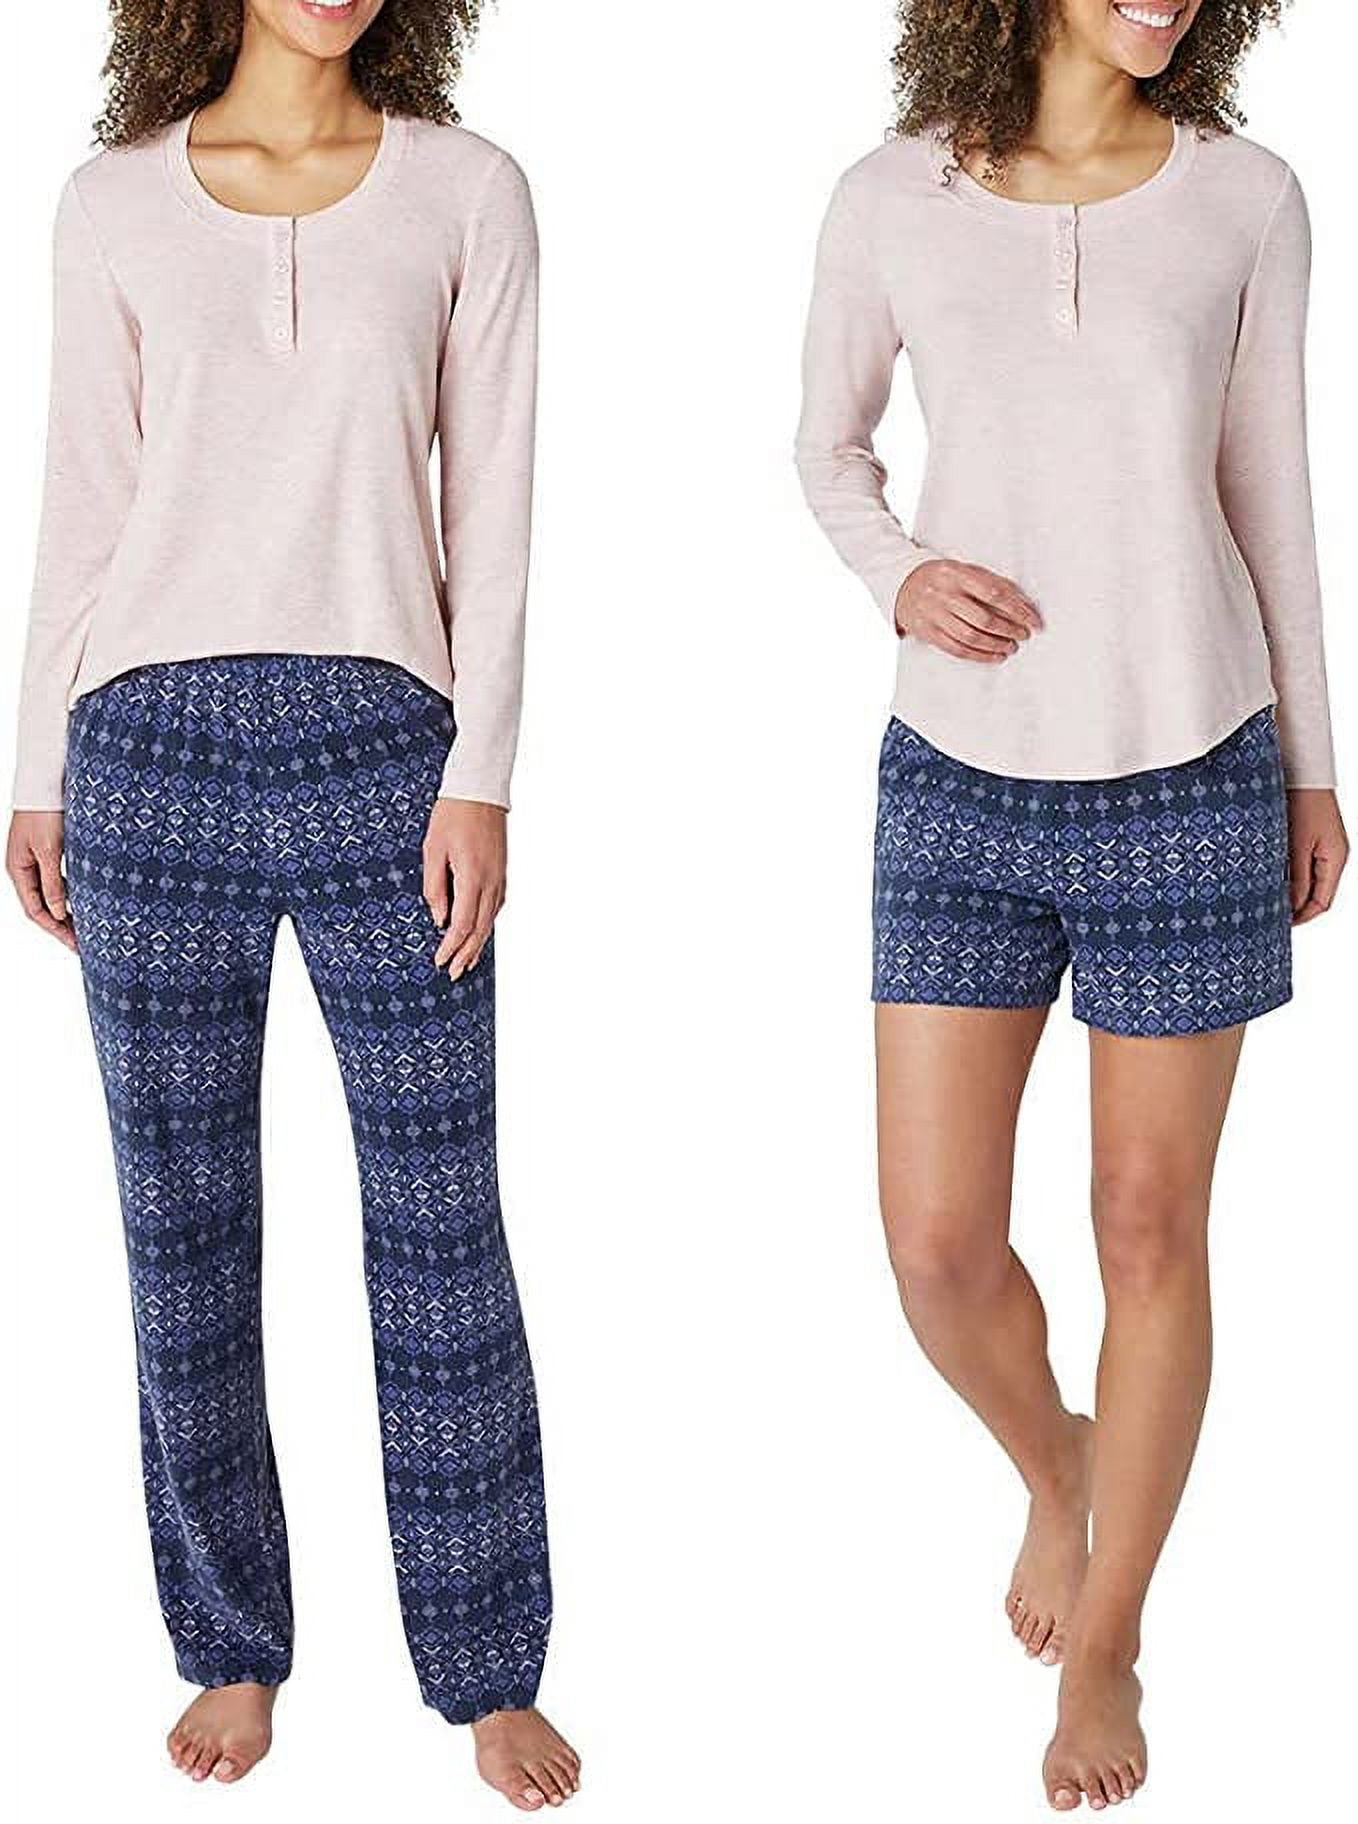 Eddie Bauer Women's 3-Piece Waffle Knit Pajama Set (Pink, Medium) 